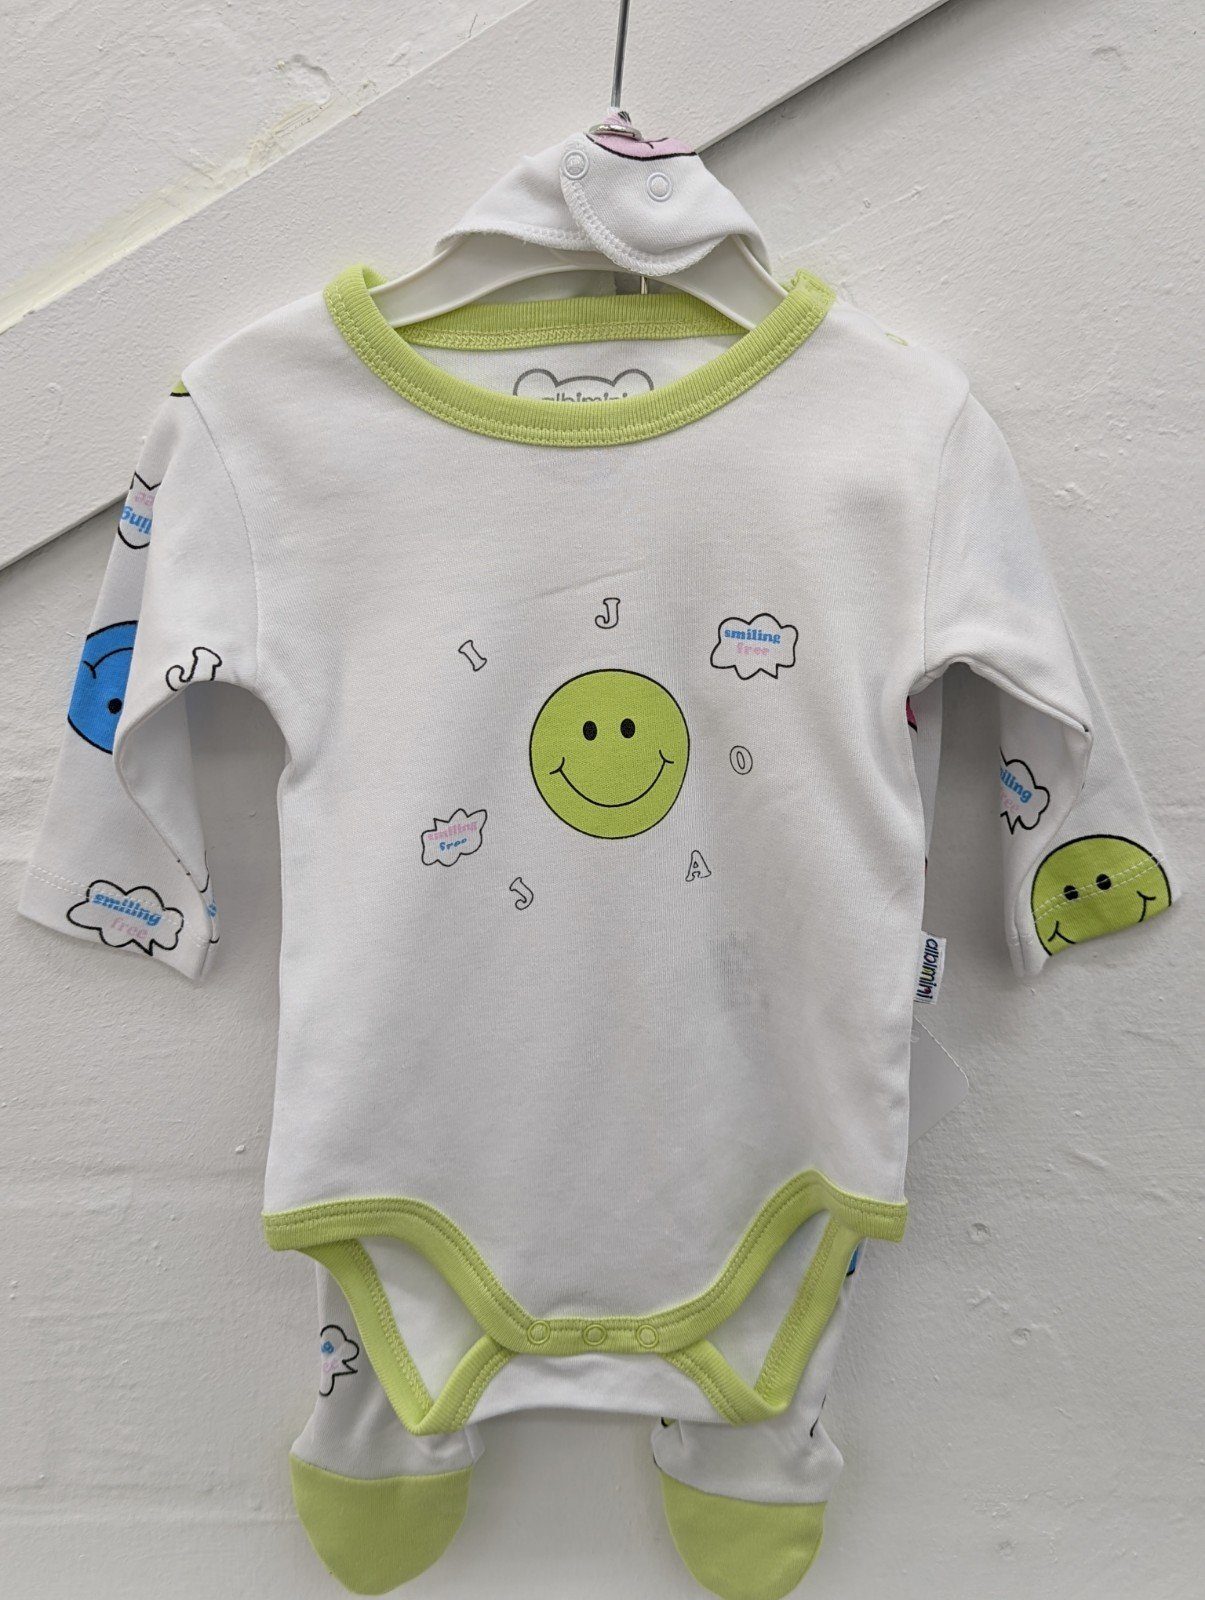 albimini Kinderanzug Baby Anzug 3-teilig Hose-Body/Overall-Tuch Grün